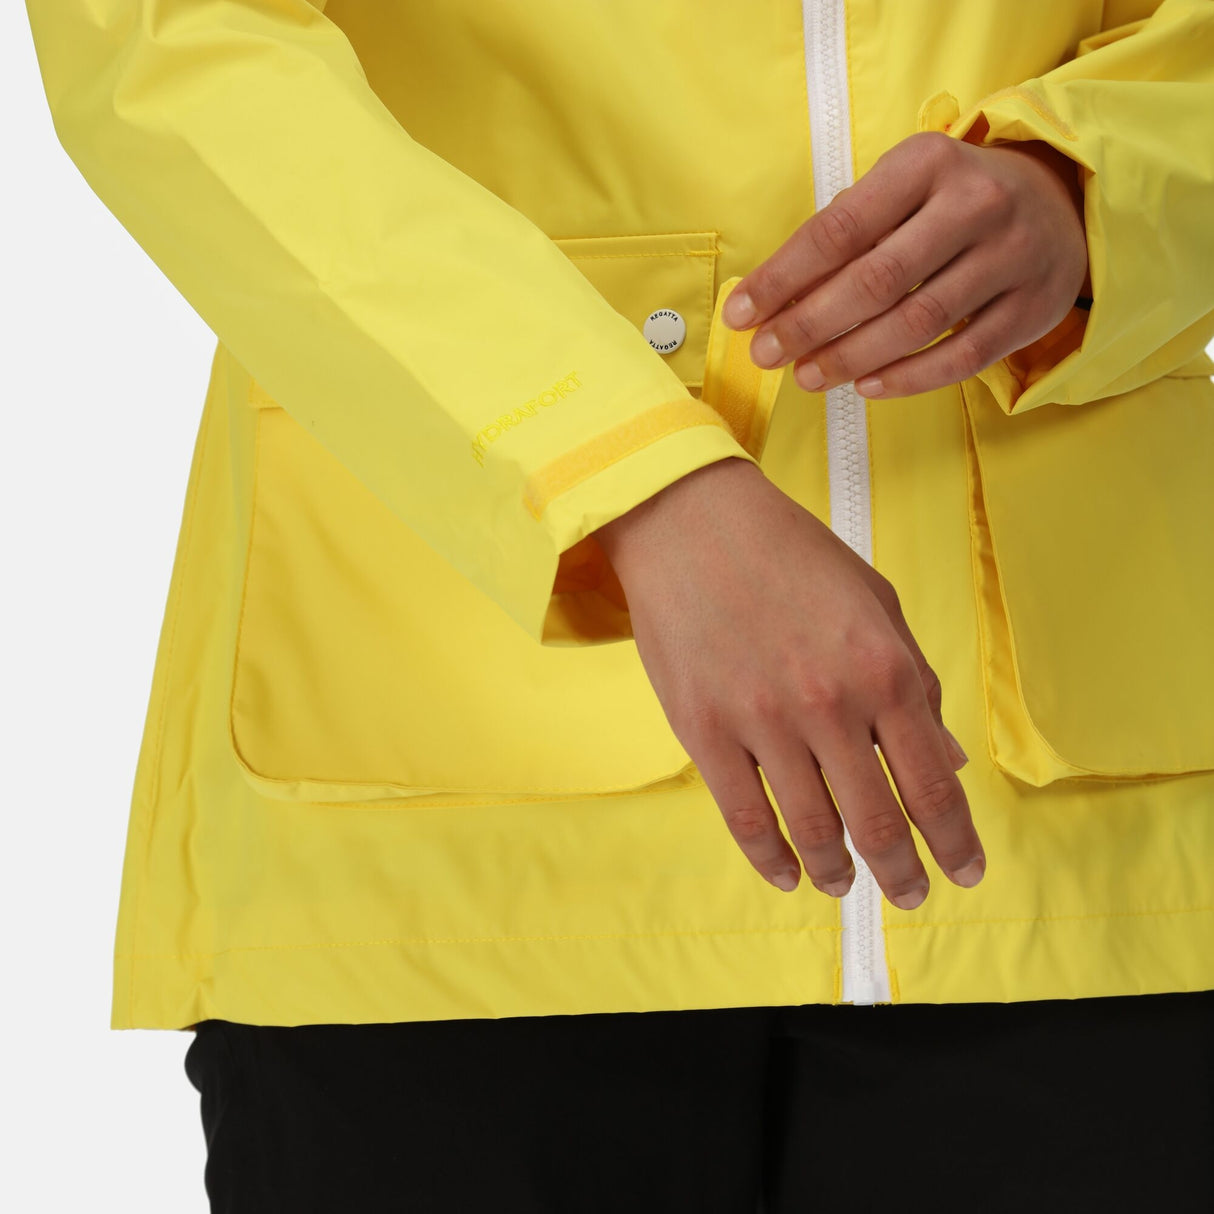 Regatta Women's Baysea Waterproof Jacket